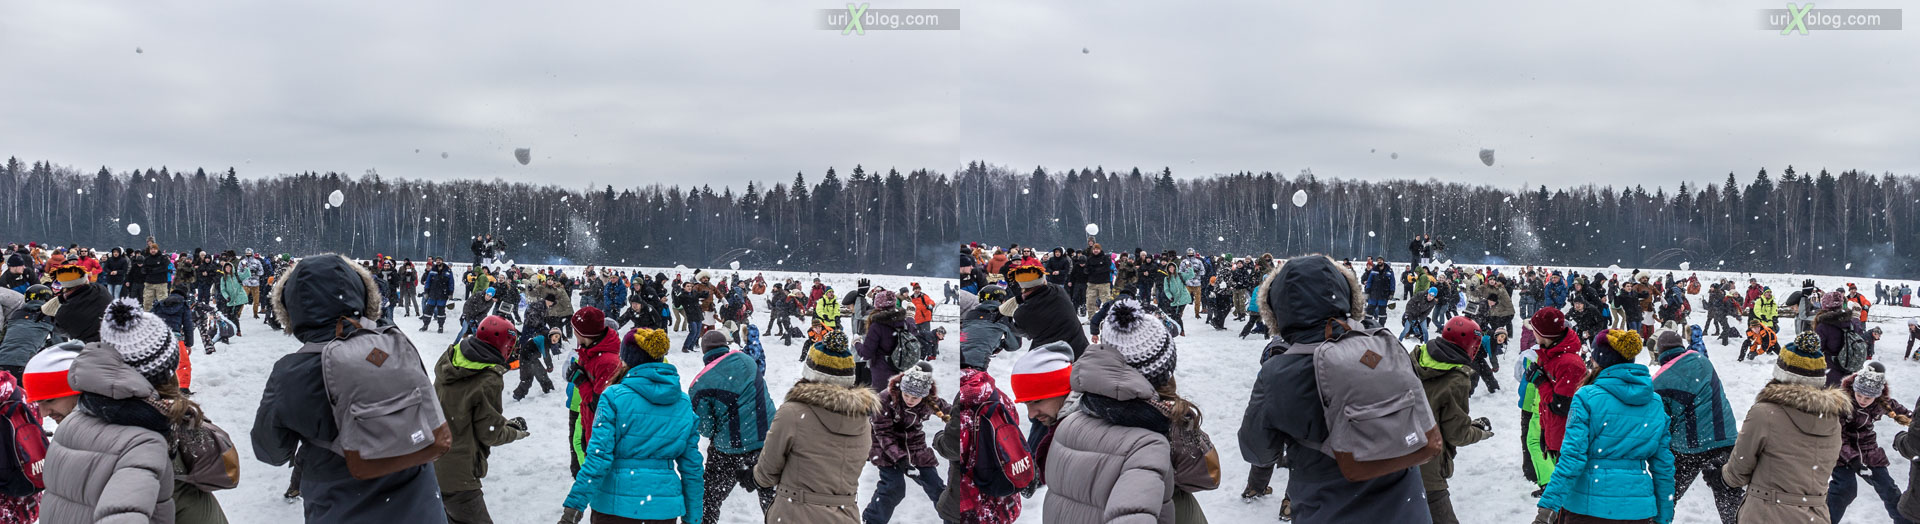 Bakshevskaja Maslenitsa, snowballs, fight, Khlyupino railway station, Moscow, Russia, 3D, stereo pair, cross-eyed, crossview, cross view stereo pair, stereoscopic, 2015